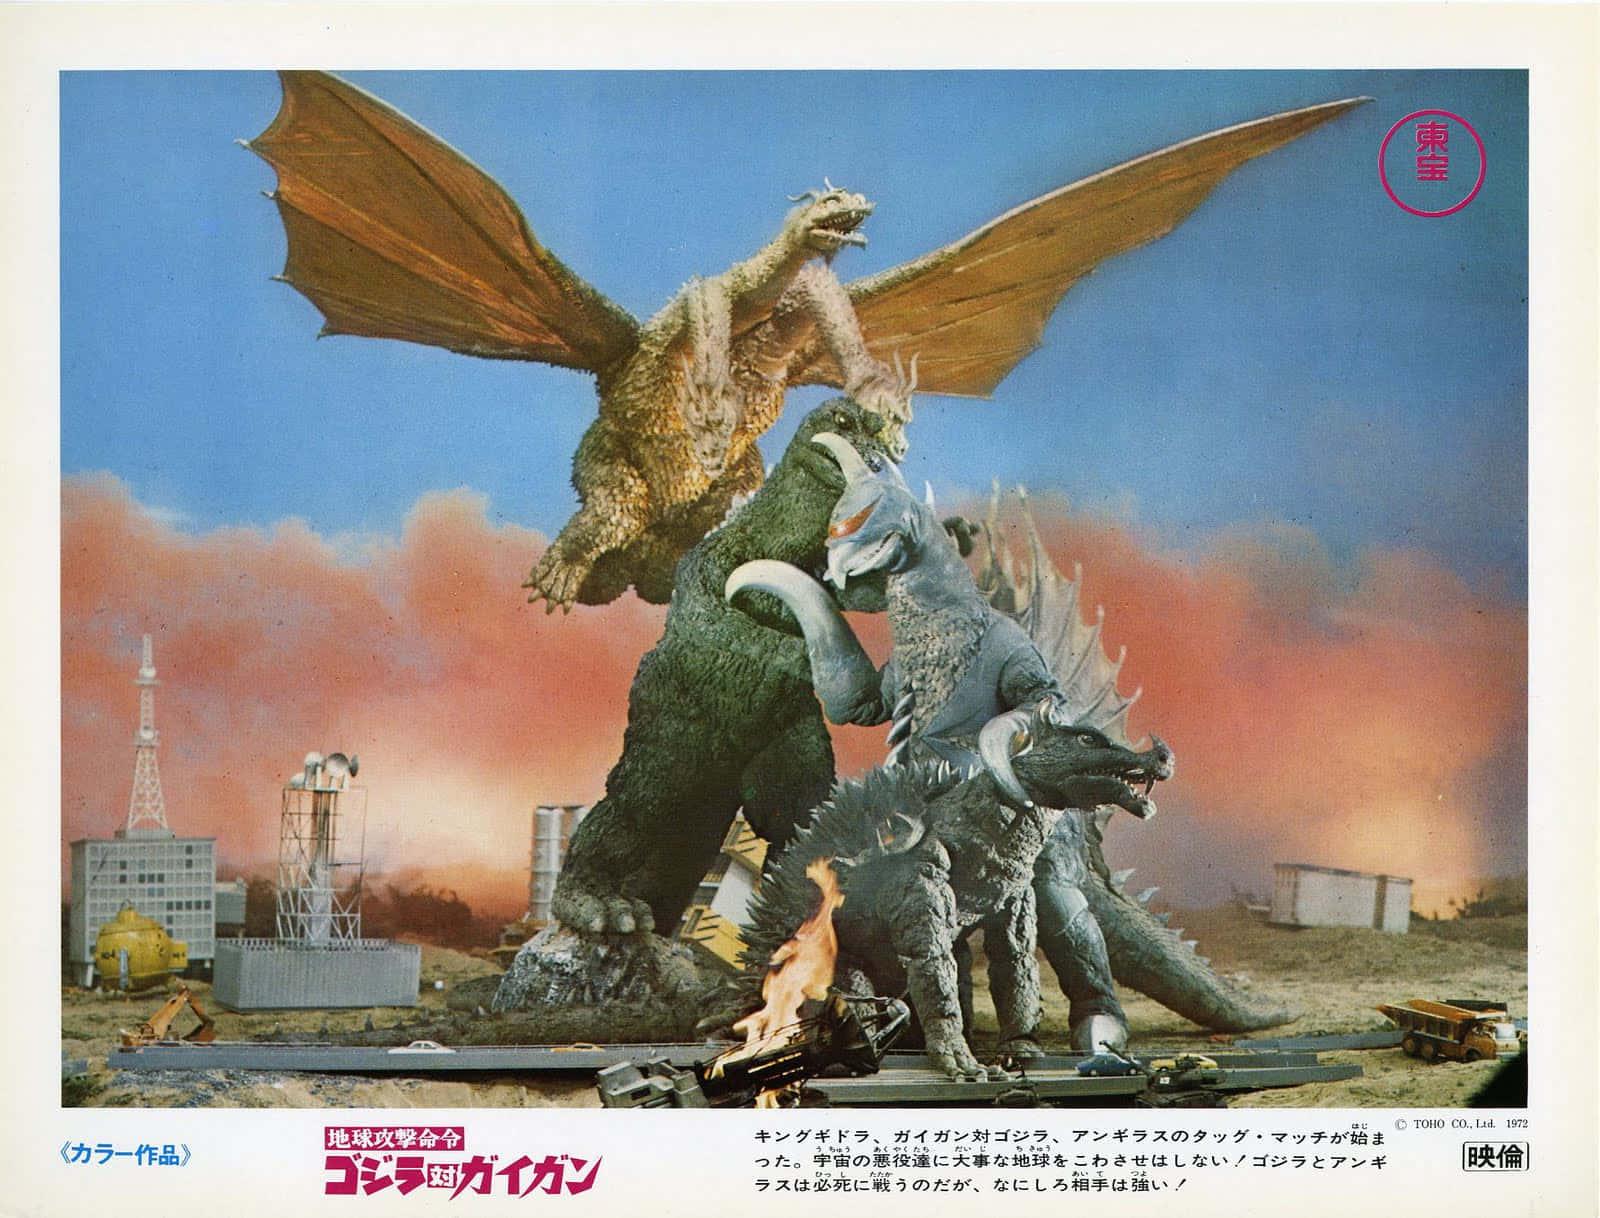 The Epic Battle Between Godzilla and Gigan Wallpaper